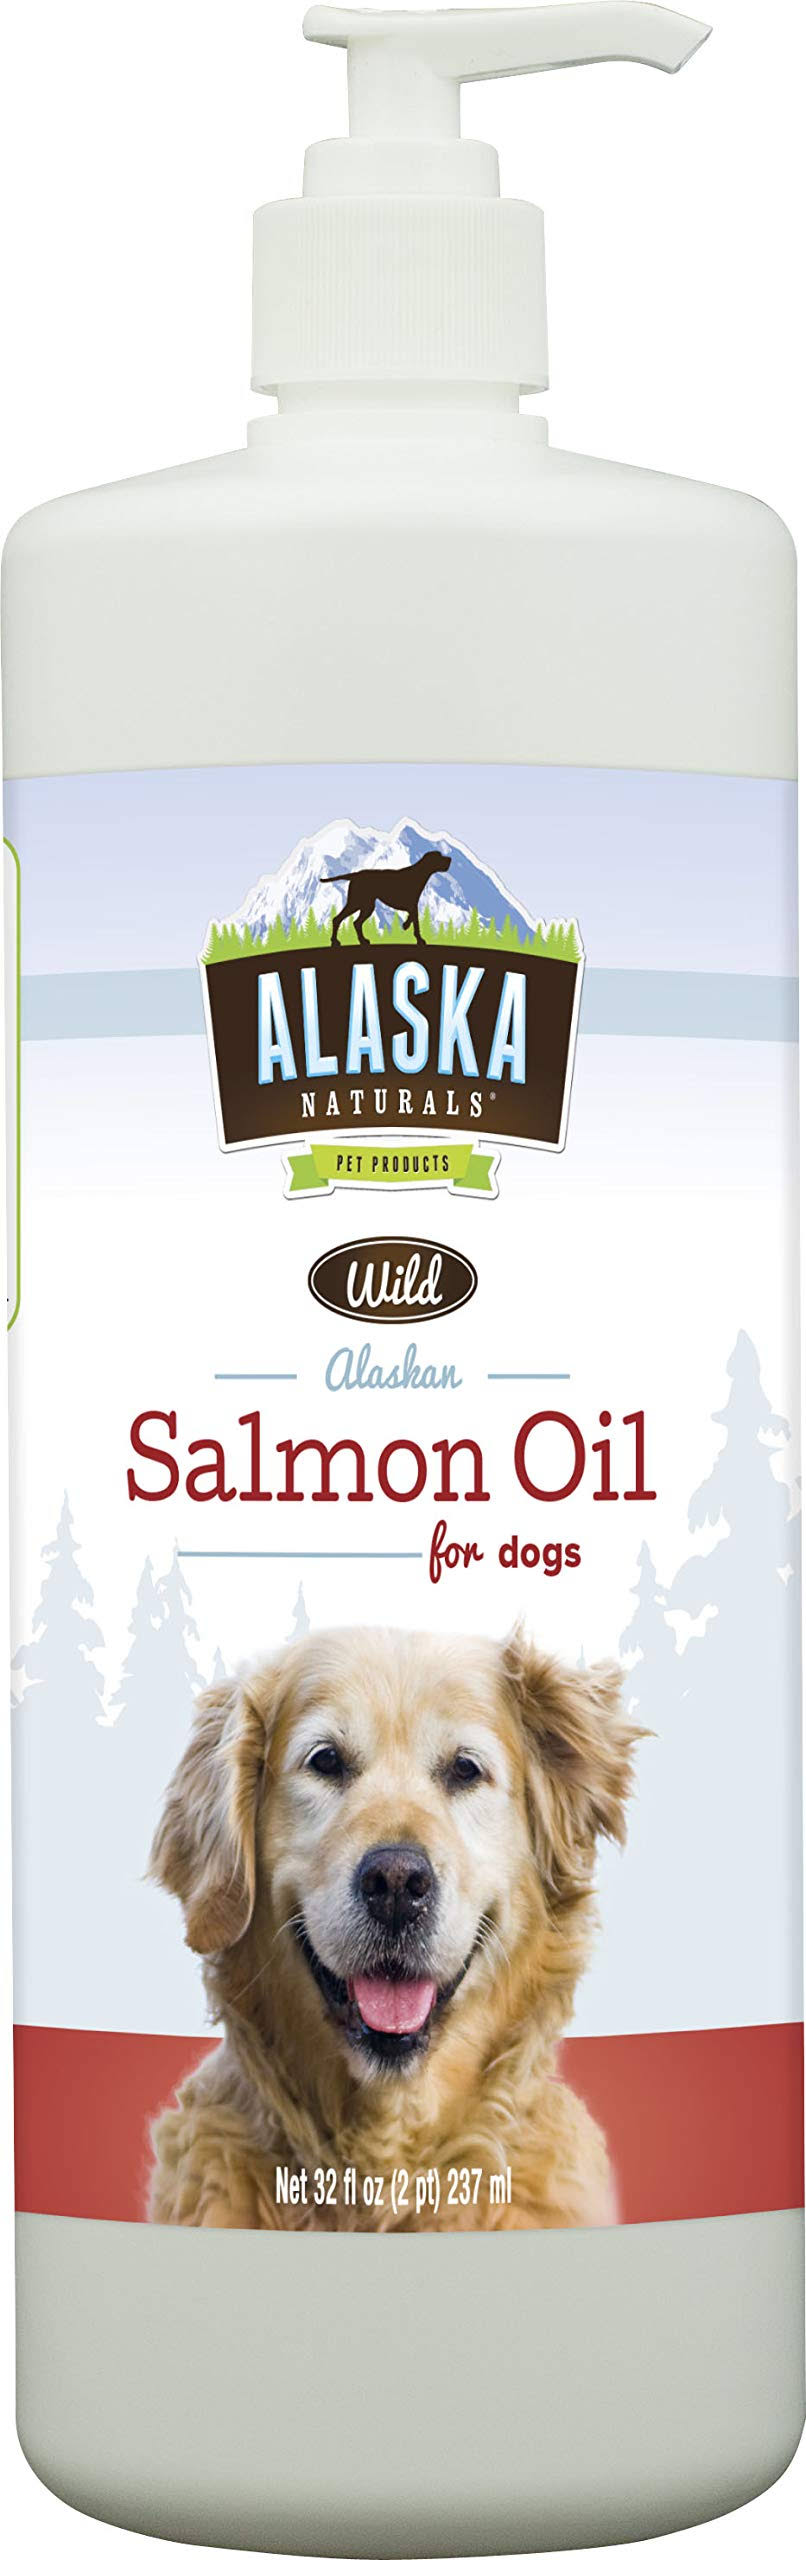 Alaska Naturals Salmon Oil Dog